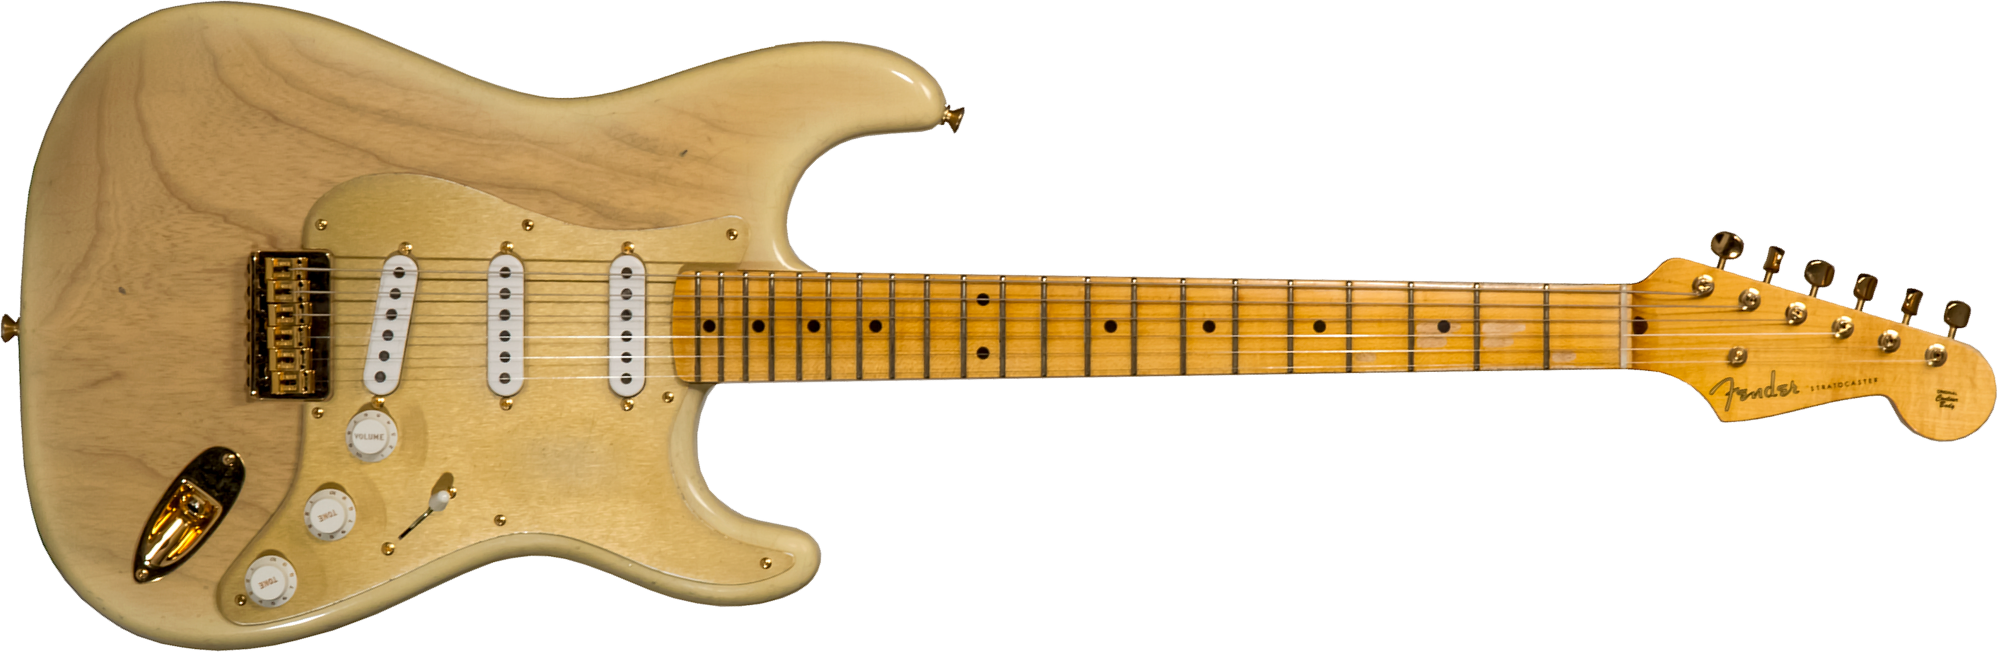 Fender Custom Shop Strat 1955 Hardtail Gold Hardware 3s Trem Mn #cz568215 - Journeyman Relic Natural Blonde - Guitarra eléctrica con forma de str. - M